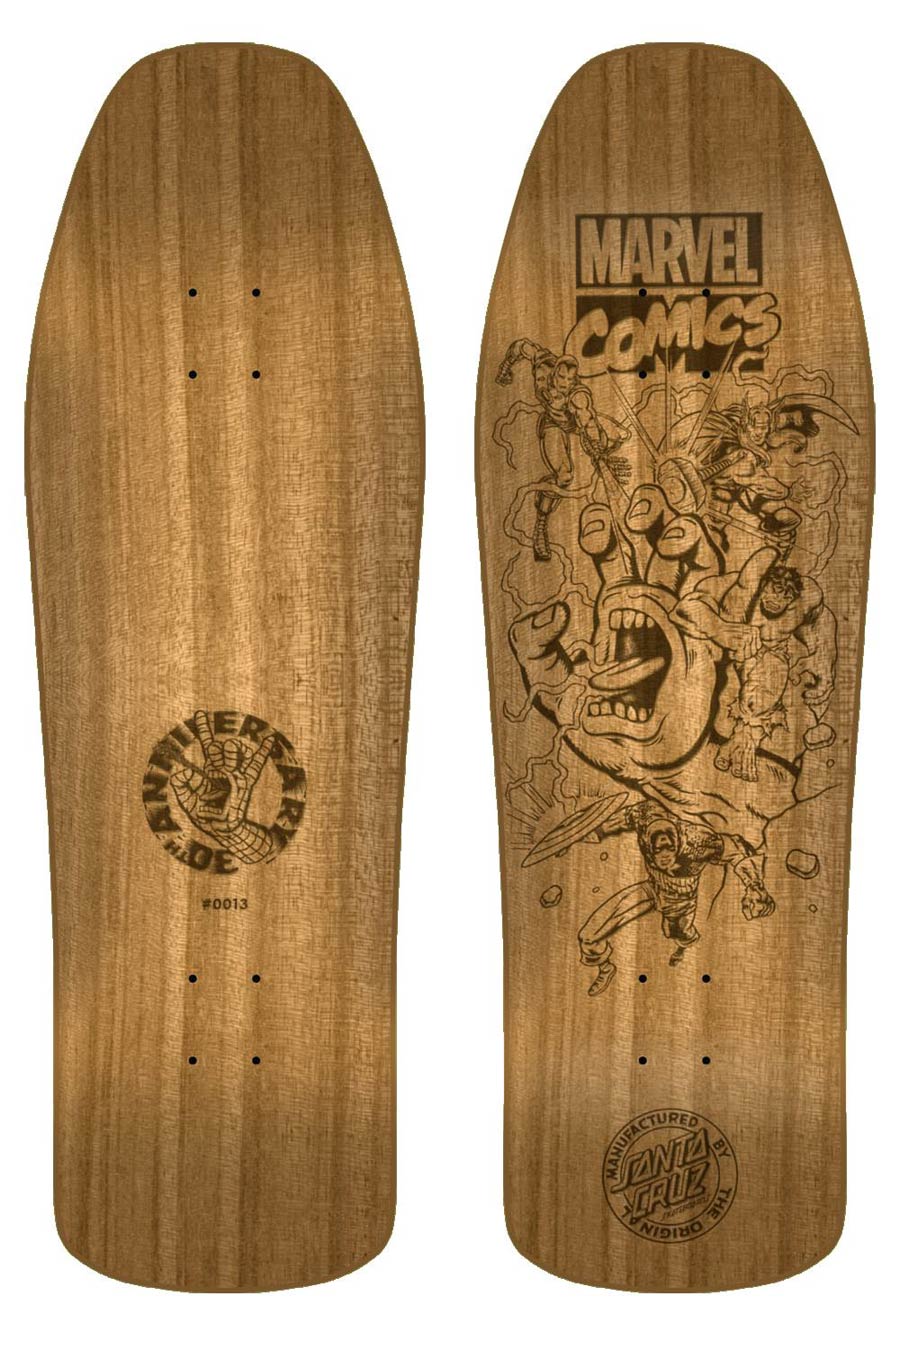 Marvel Santa Cruz Skate Deck - Battle Engraved